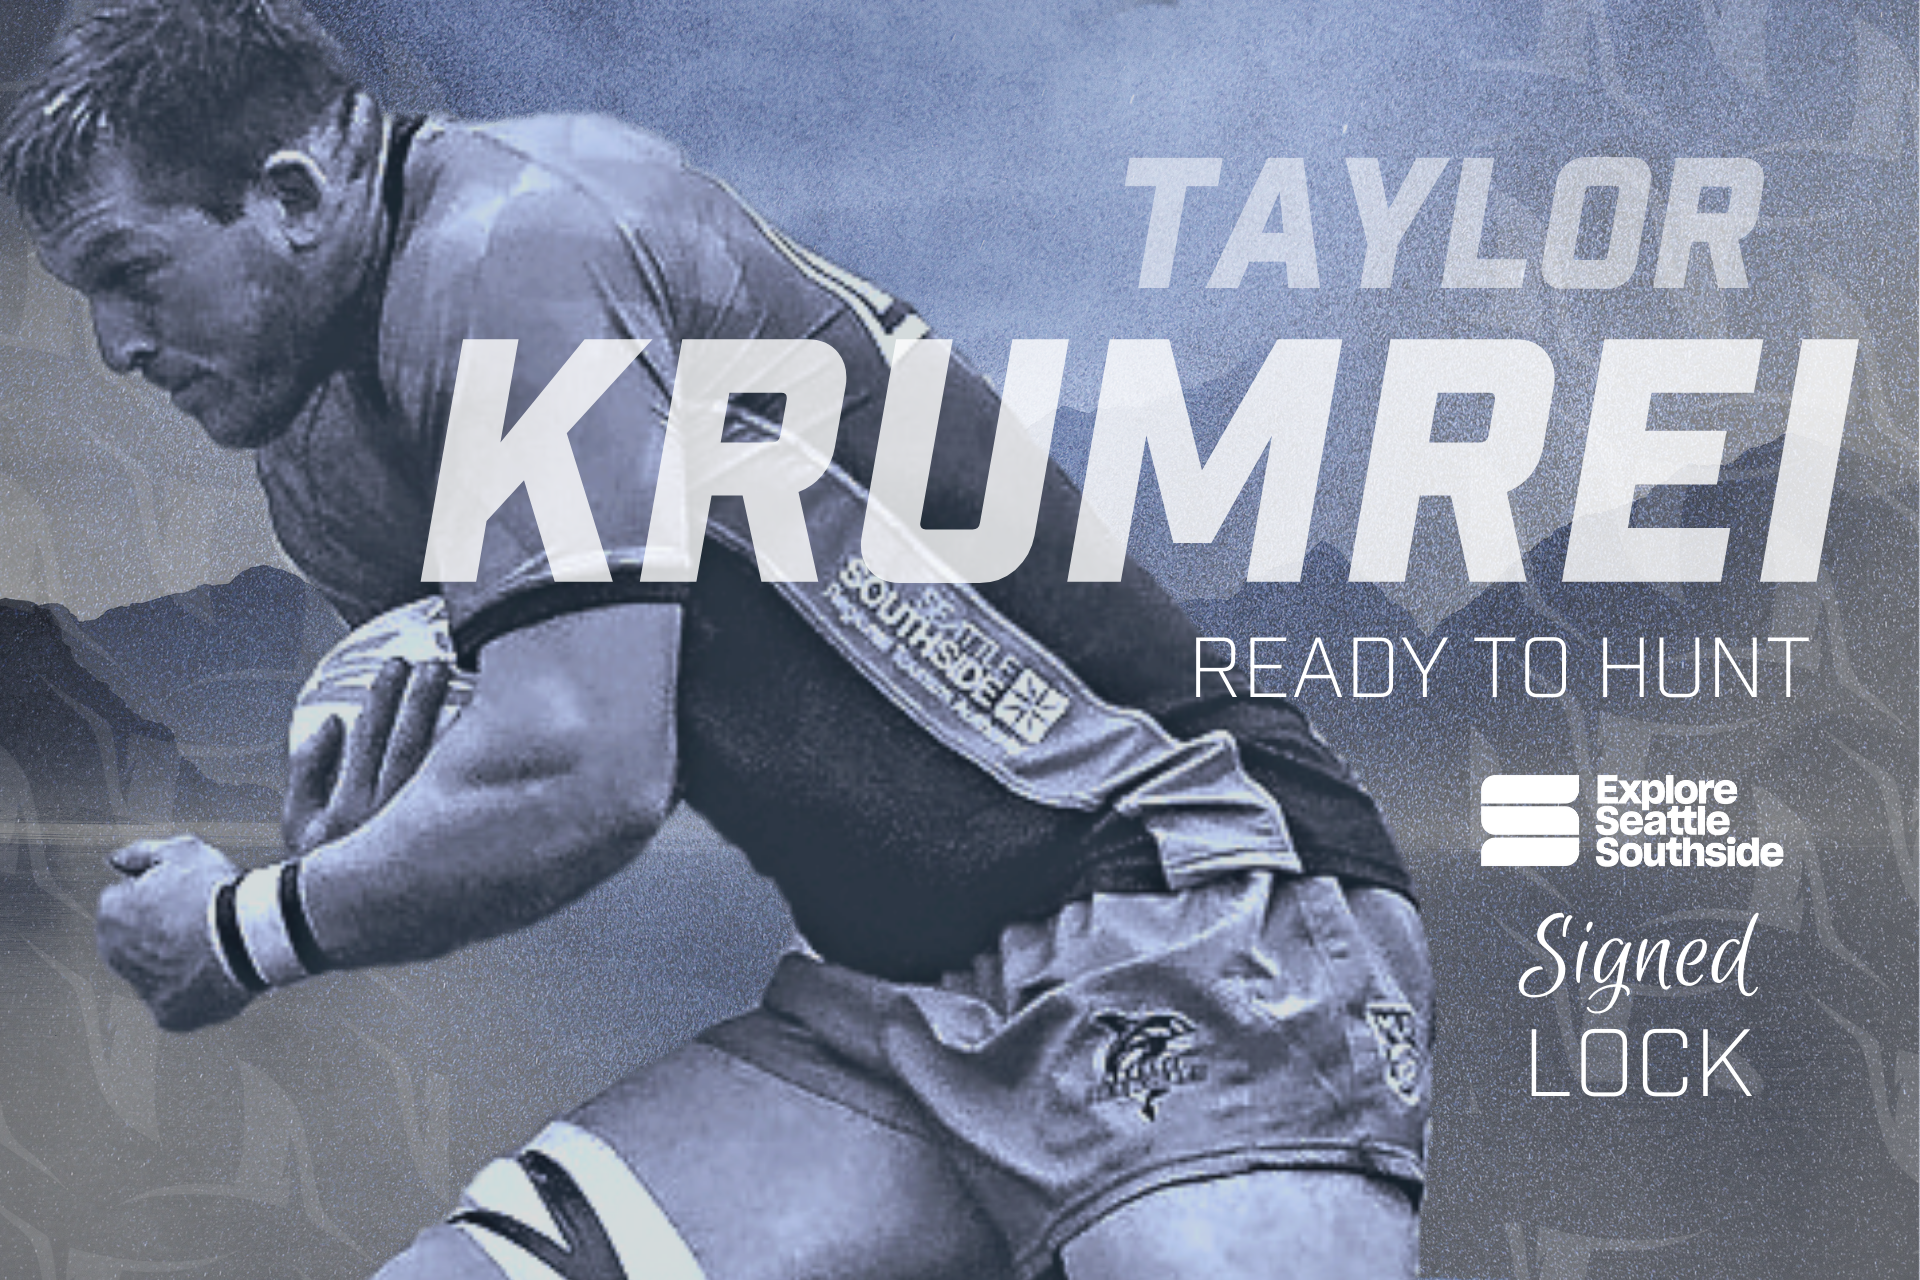 Taylor Krumrei Returns to Seattle